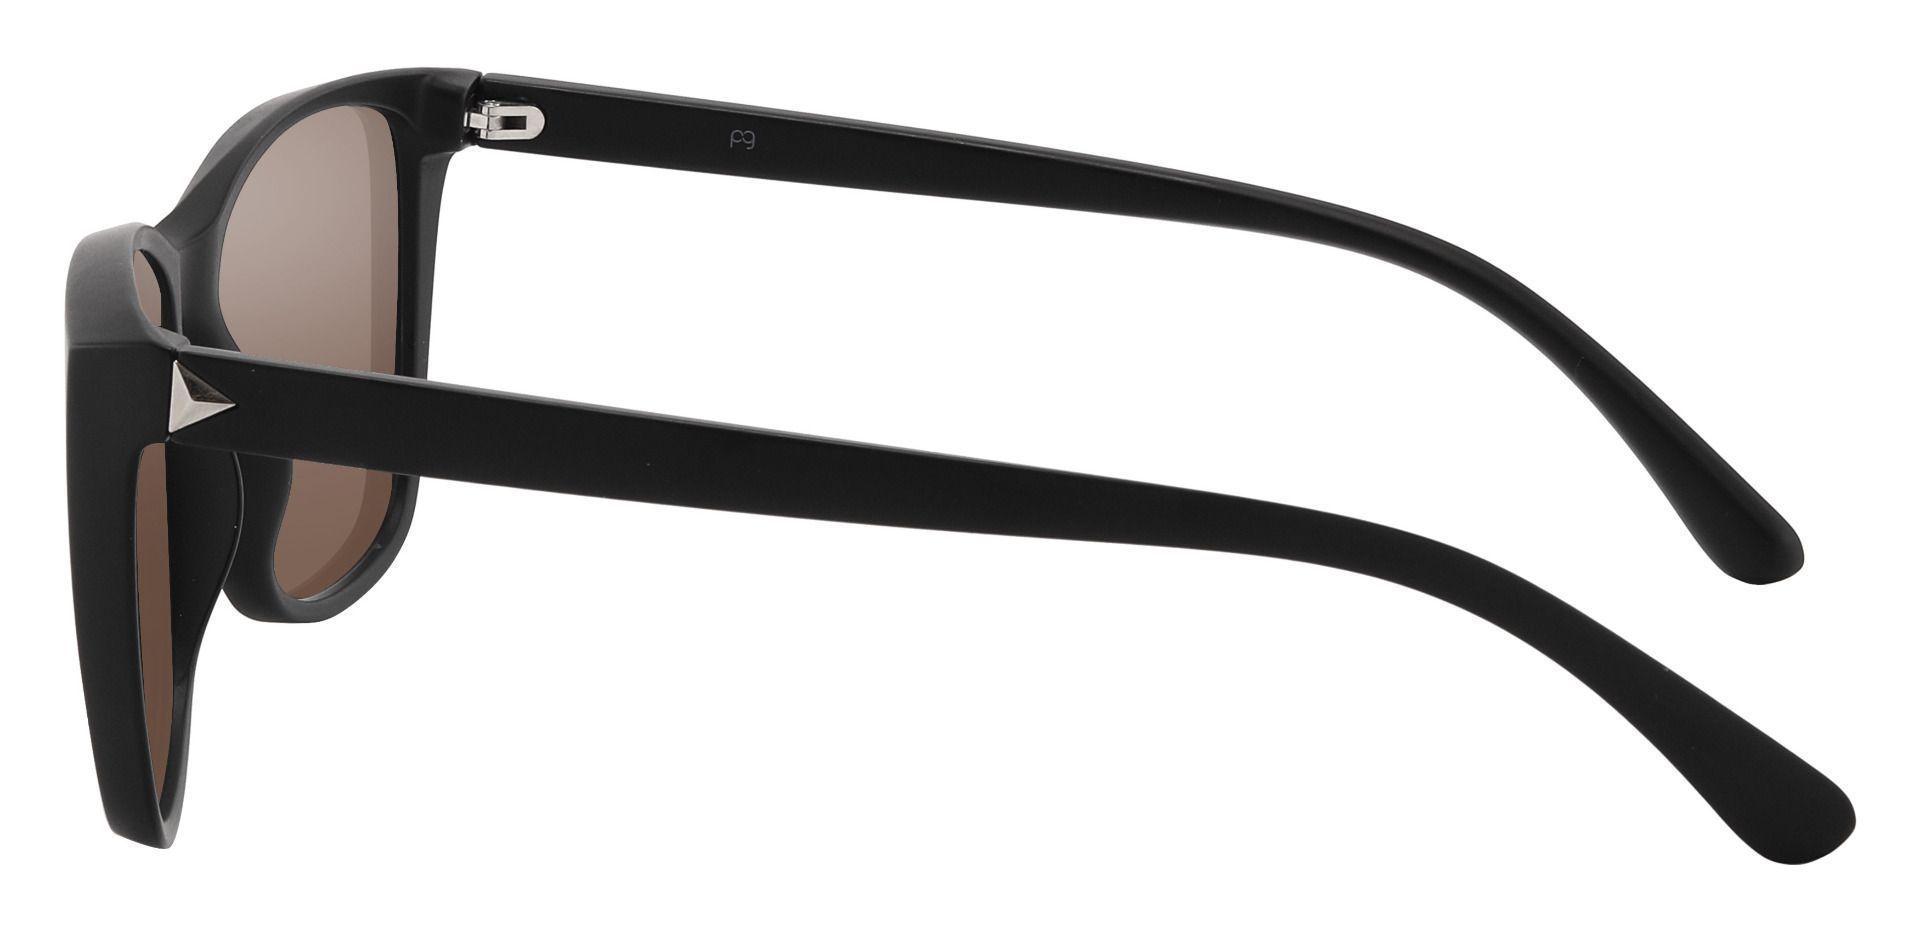 Taryn Square Prescription Sunglasses - Black Frame With Brown Lenses